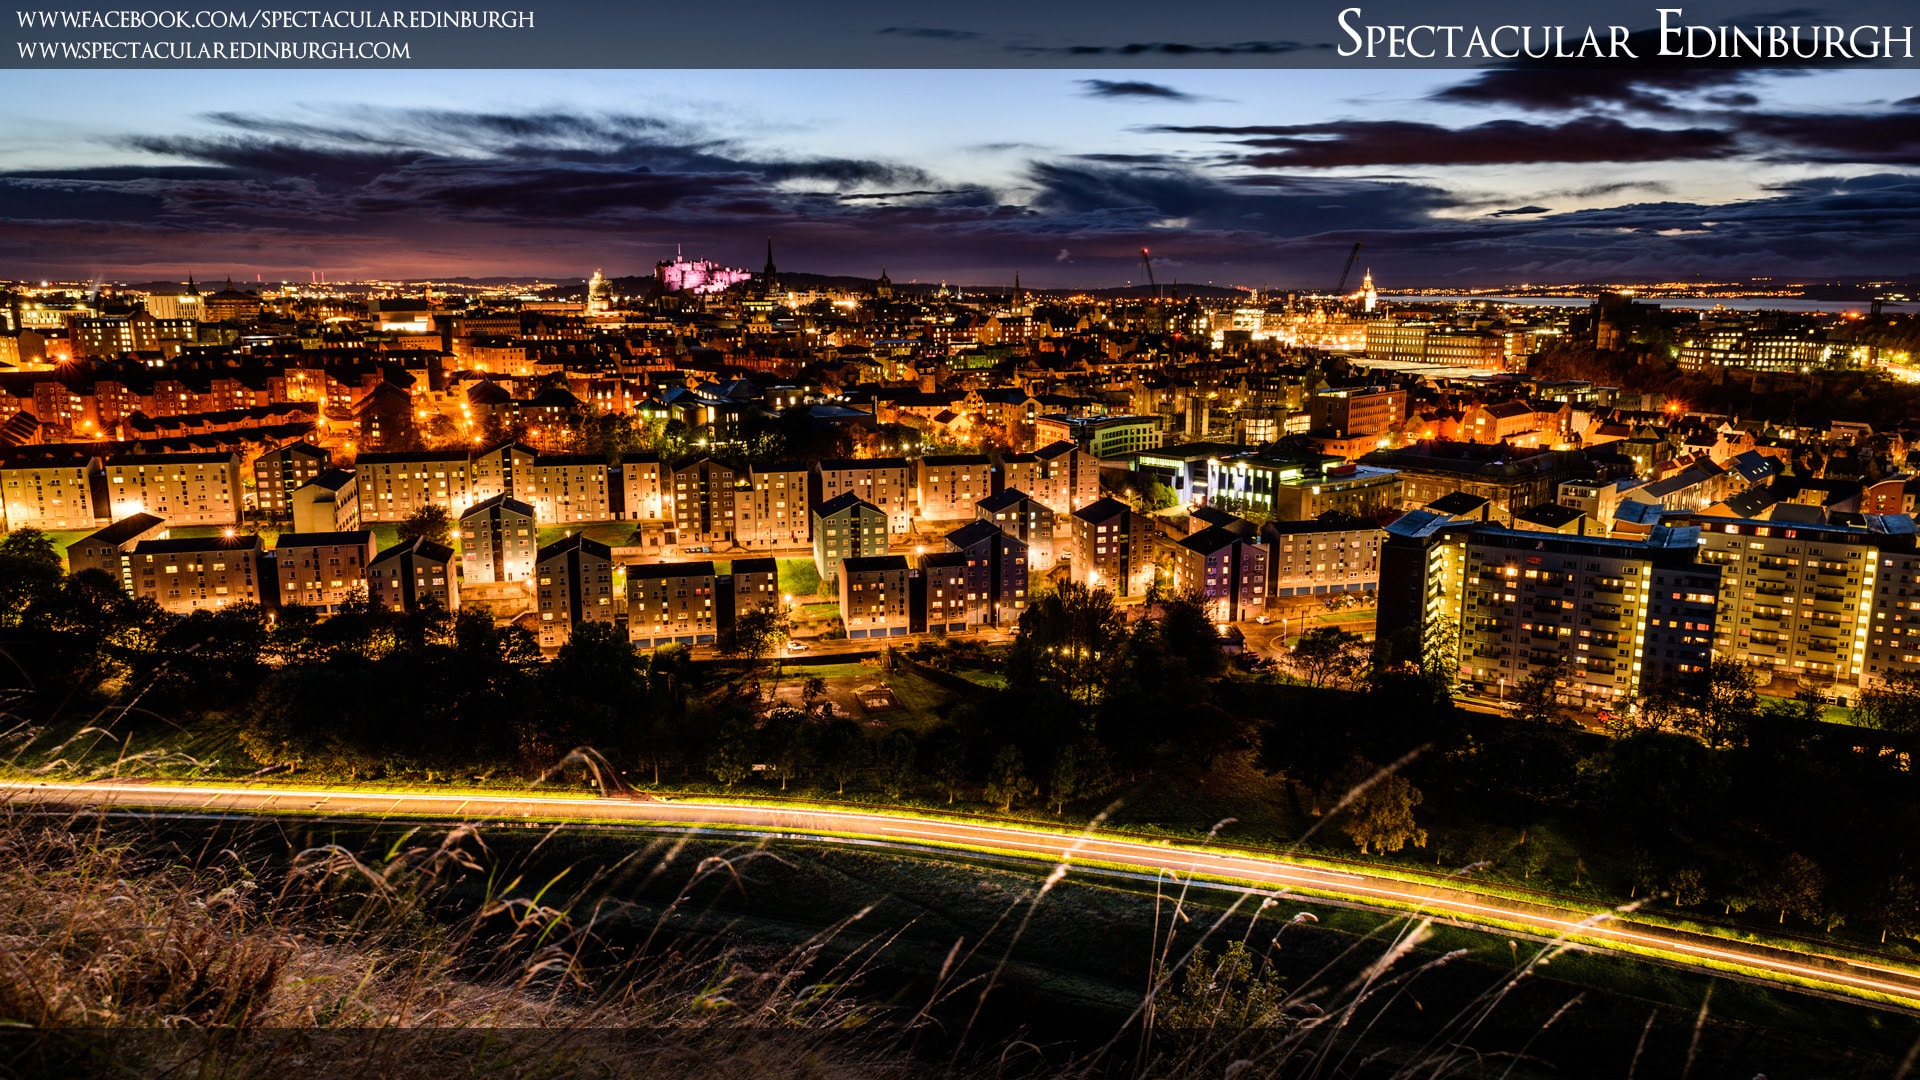 Wallpaper 4 - Golden City of Edinburgh - Spectacular Edinburgh Photography